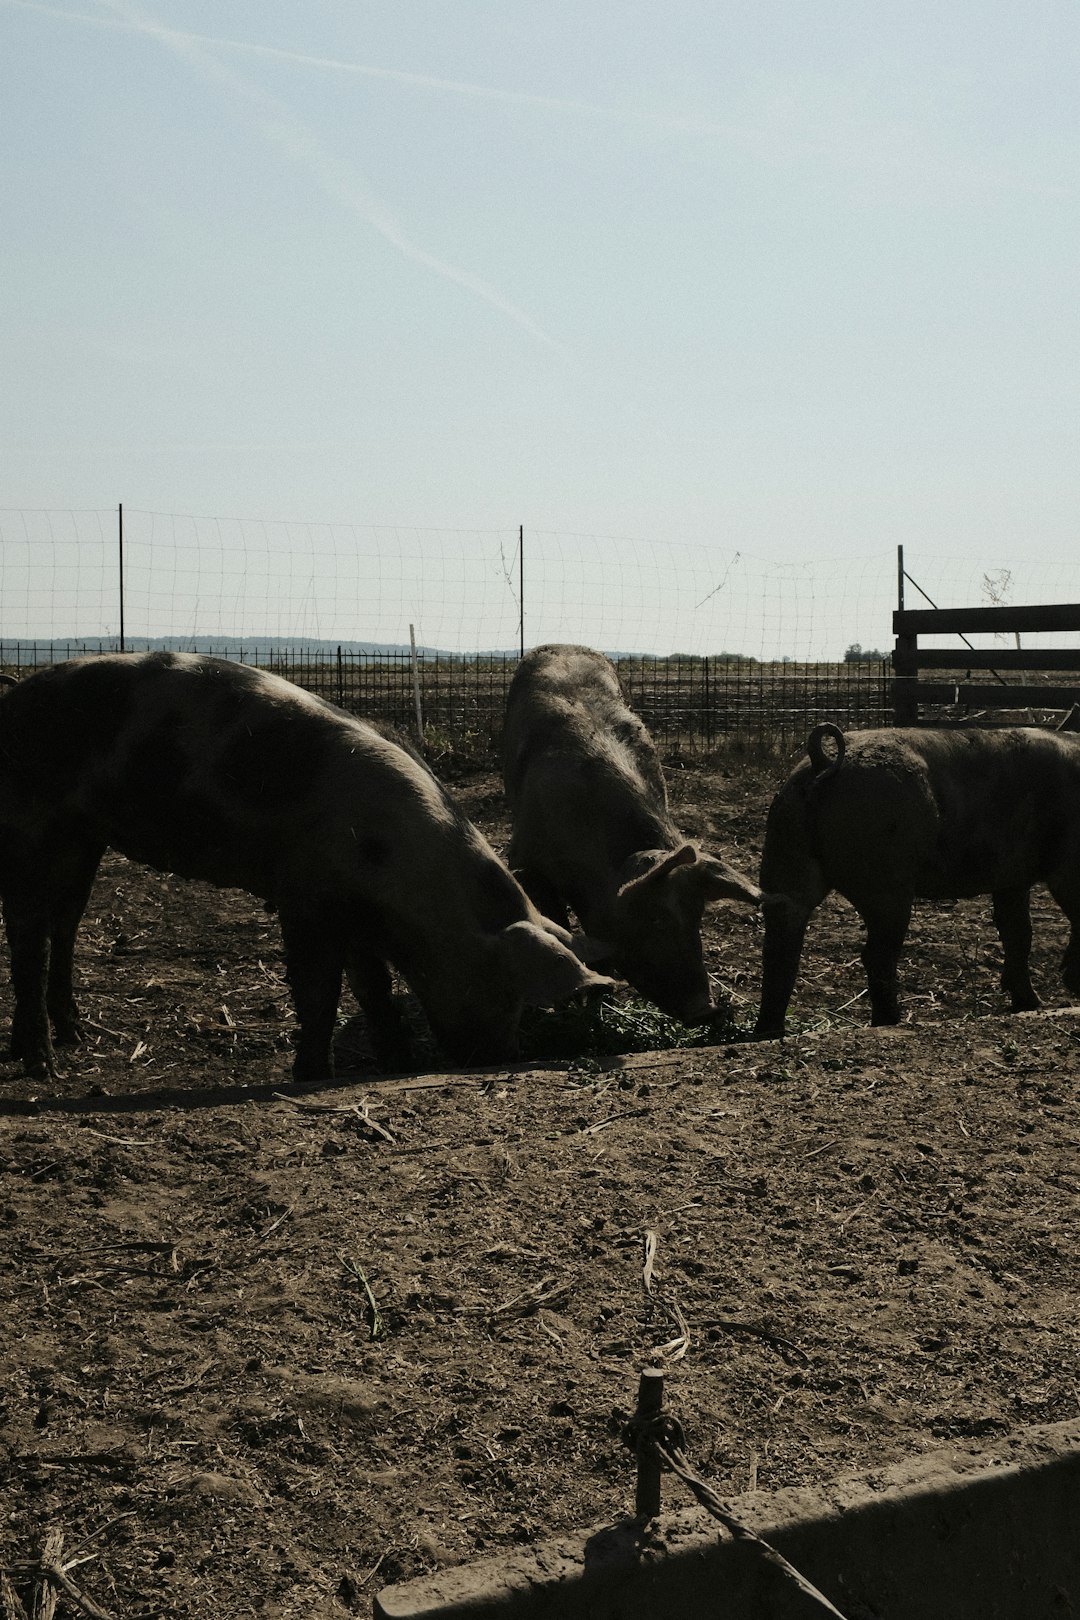 threebrown cattles